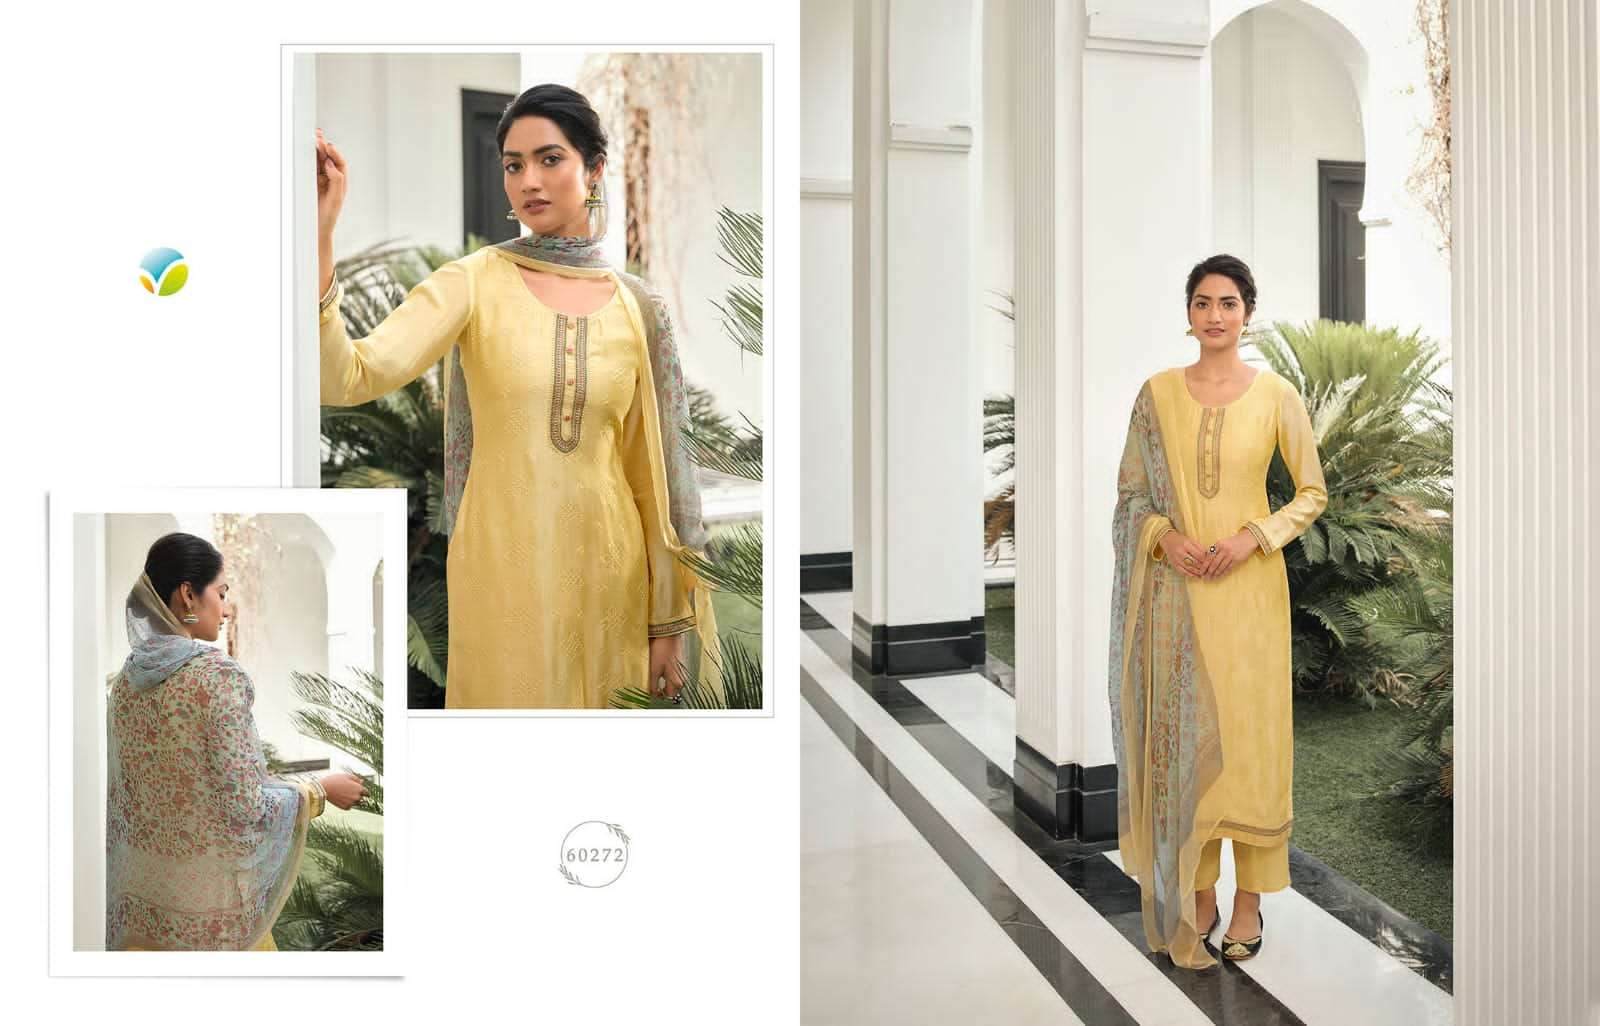 vinay fashion kervin geetanjali salwar kameez catalogue pratham exports